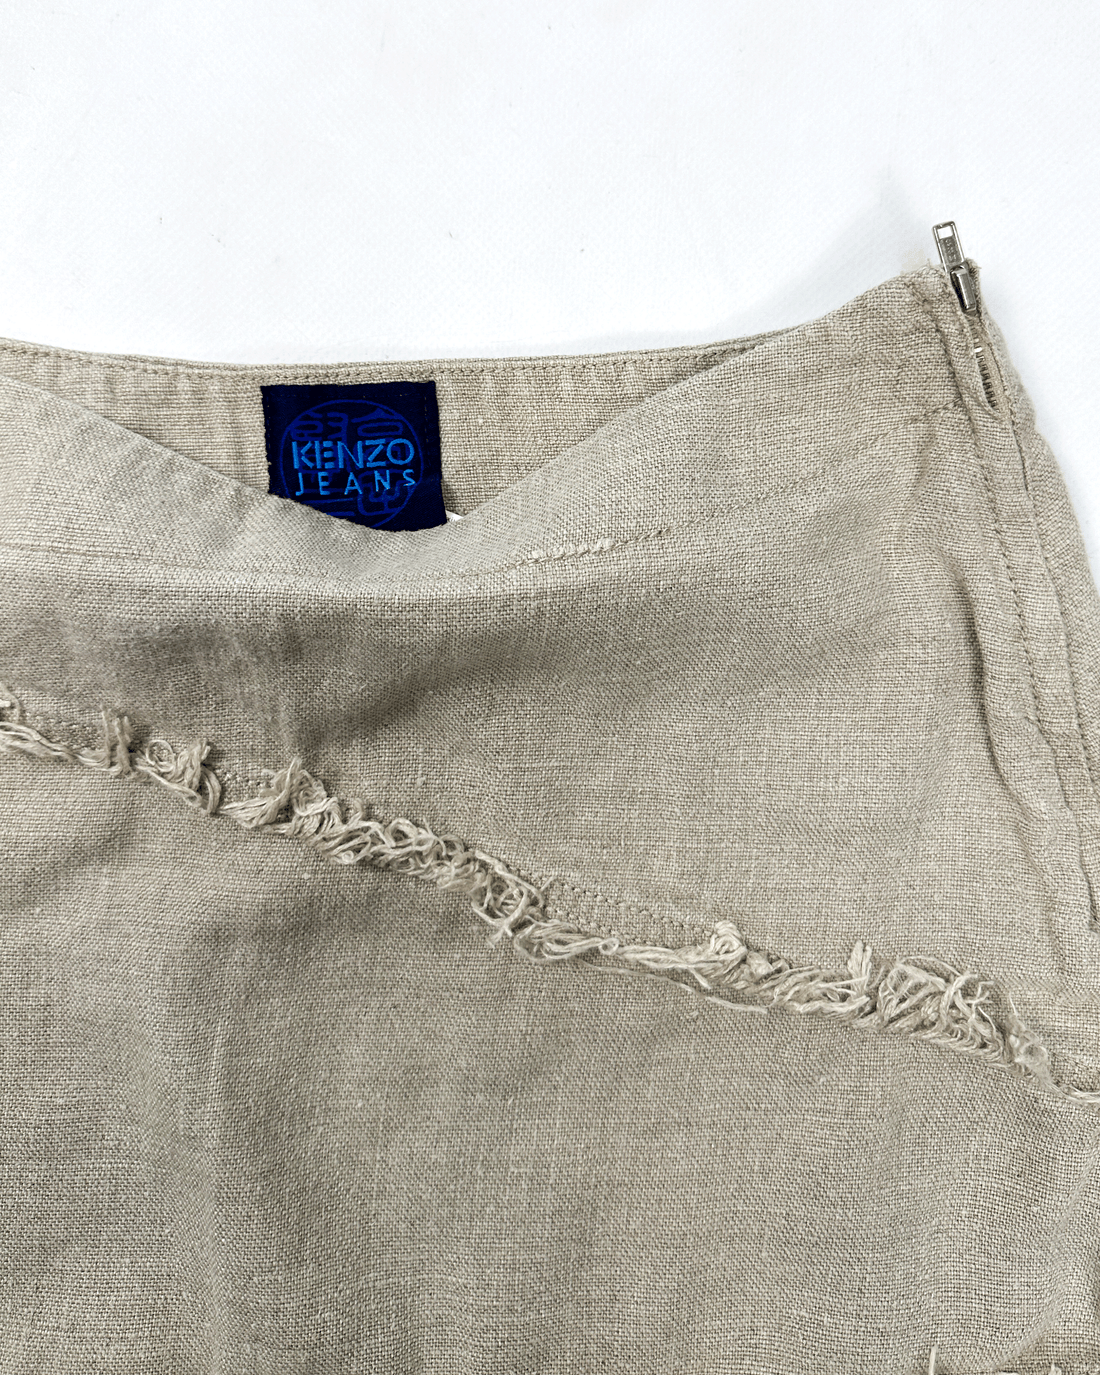 Kenzo Jeans Linen Distressed Skirt 1990's